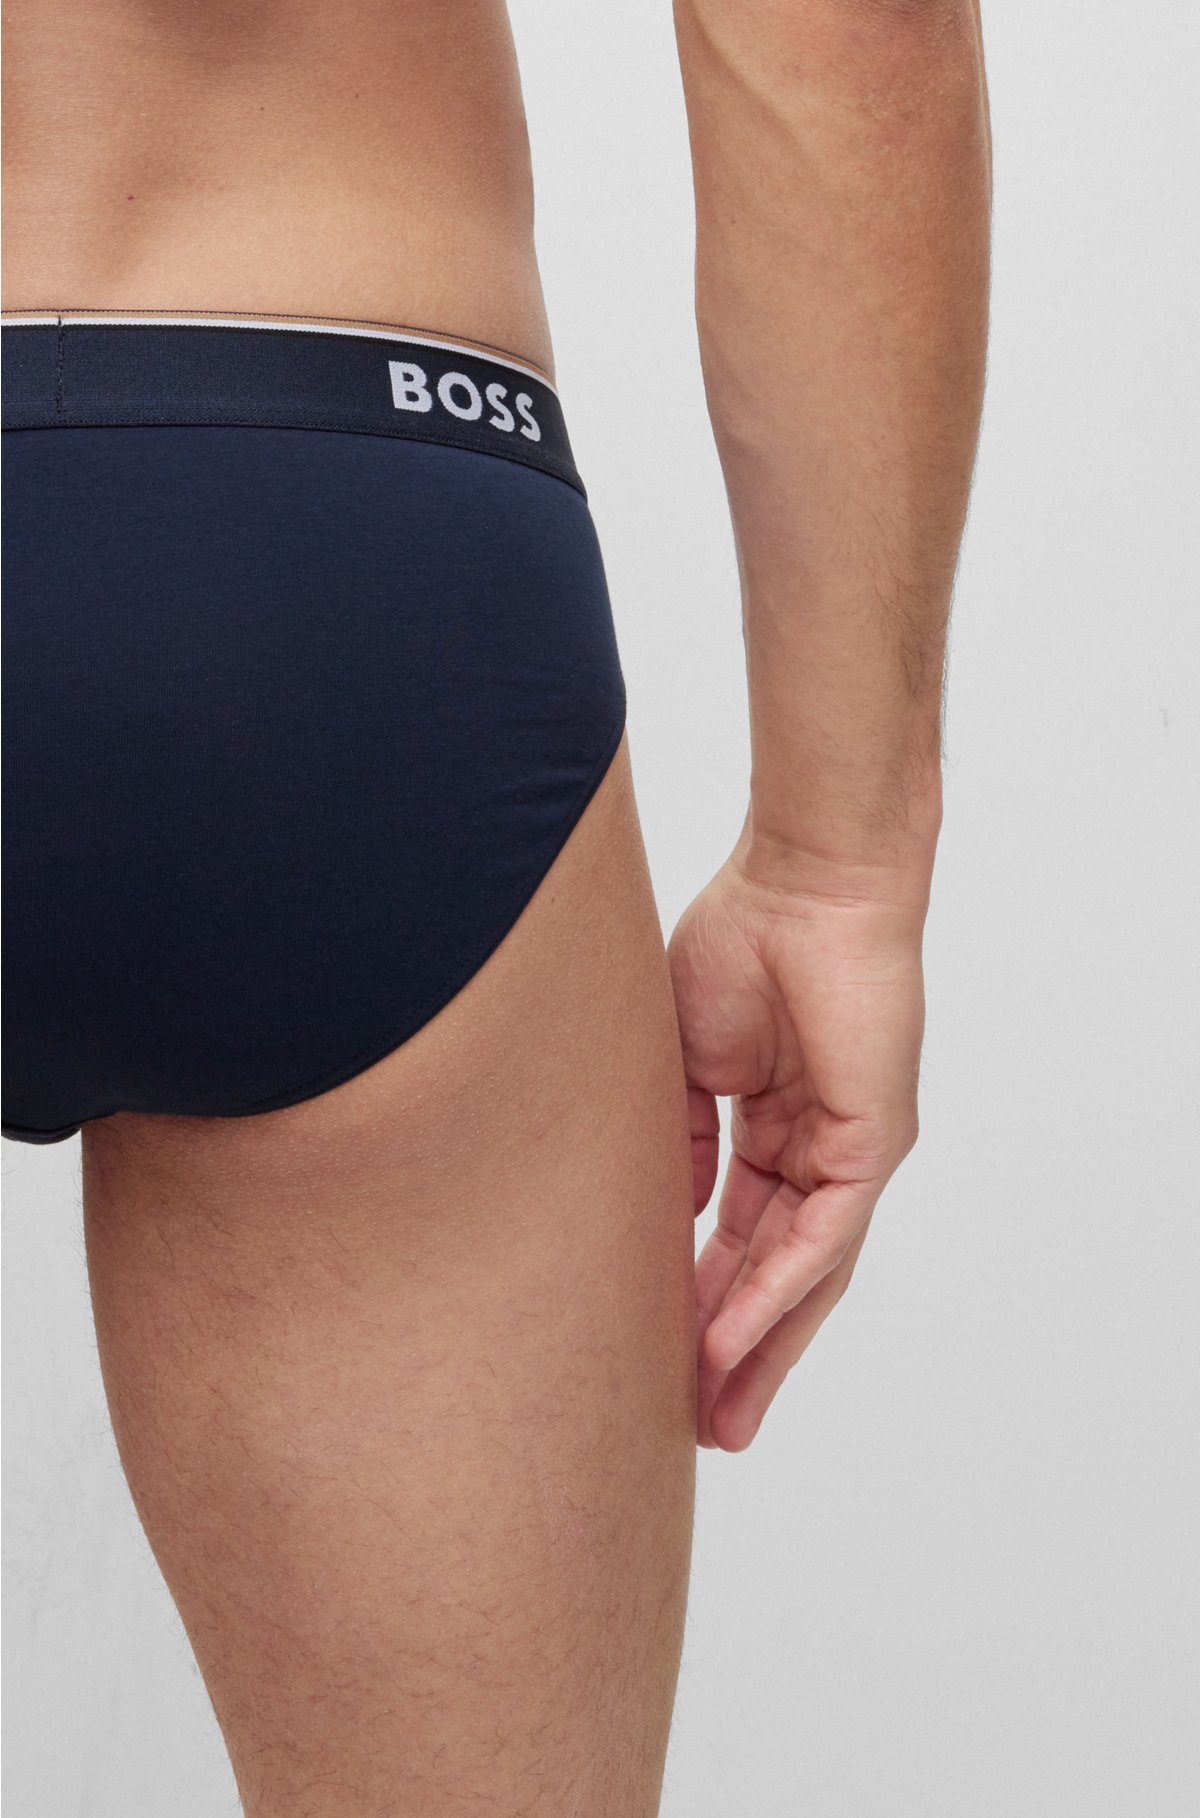 Colourful Power briefs 3-pack, BOSS, Shop Men's Underwear Multi-Packs  Online